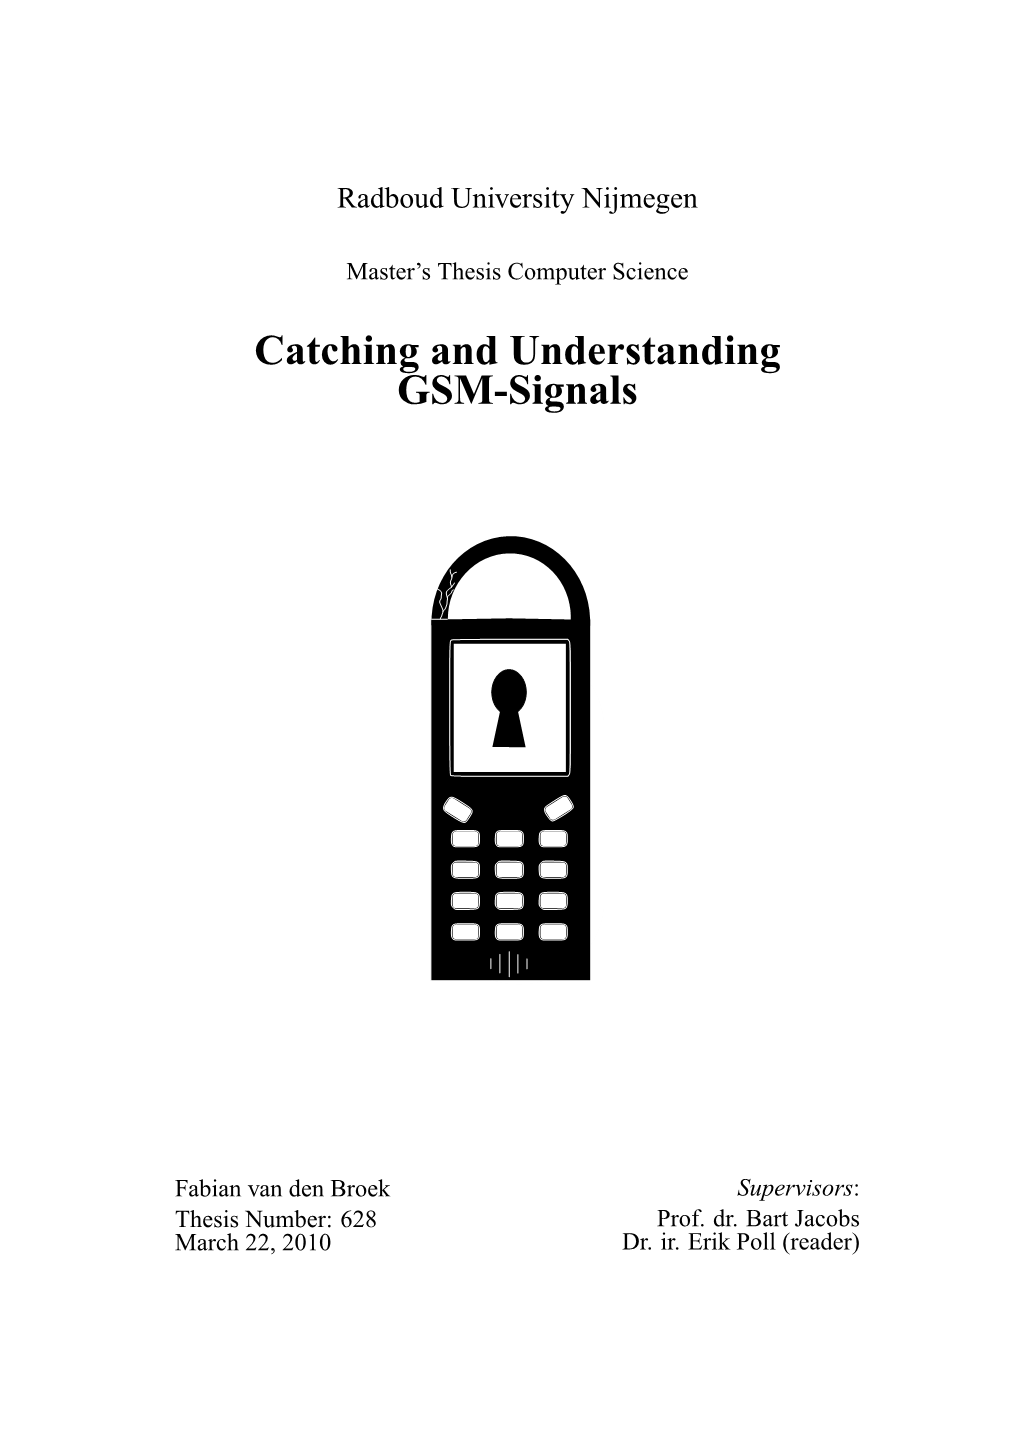 Catching and Understanding GSM-Signals